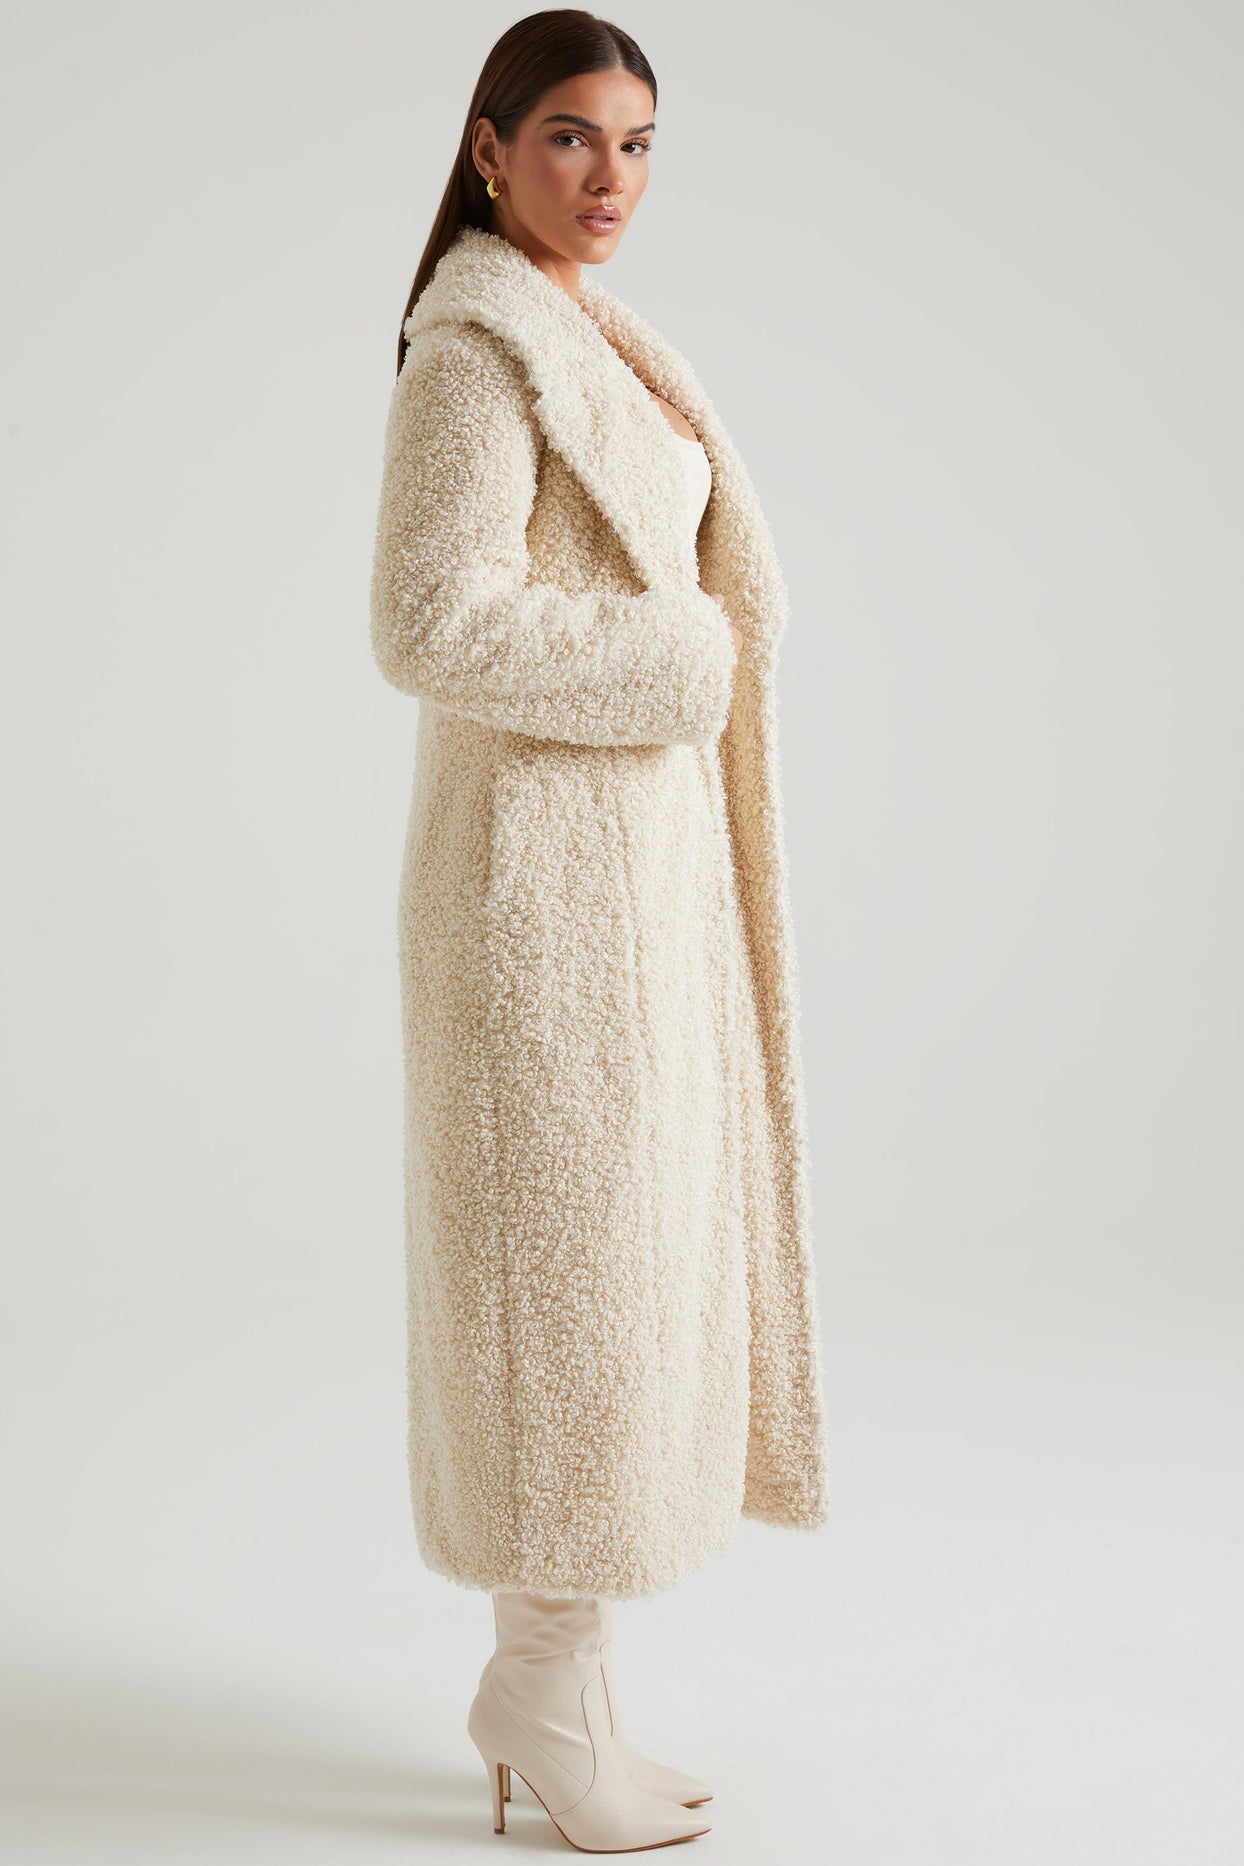 Abrigo largo de piel de oveja en color crema